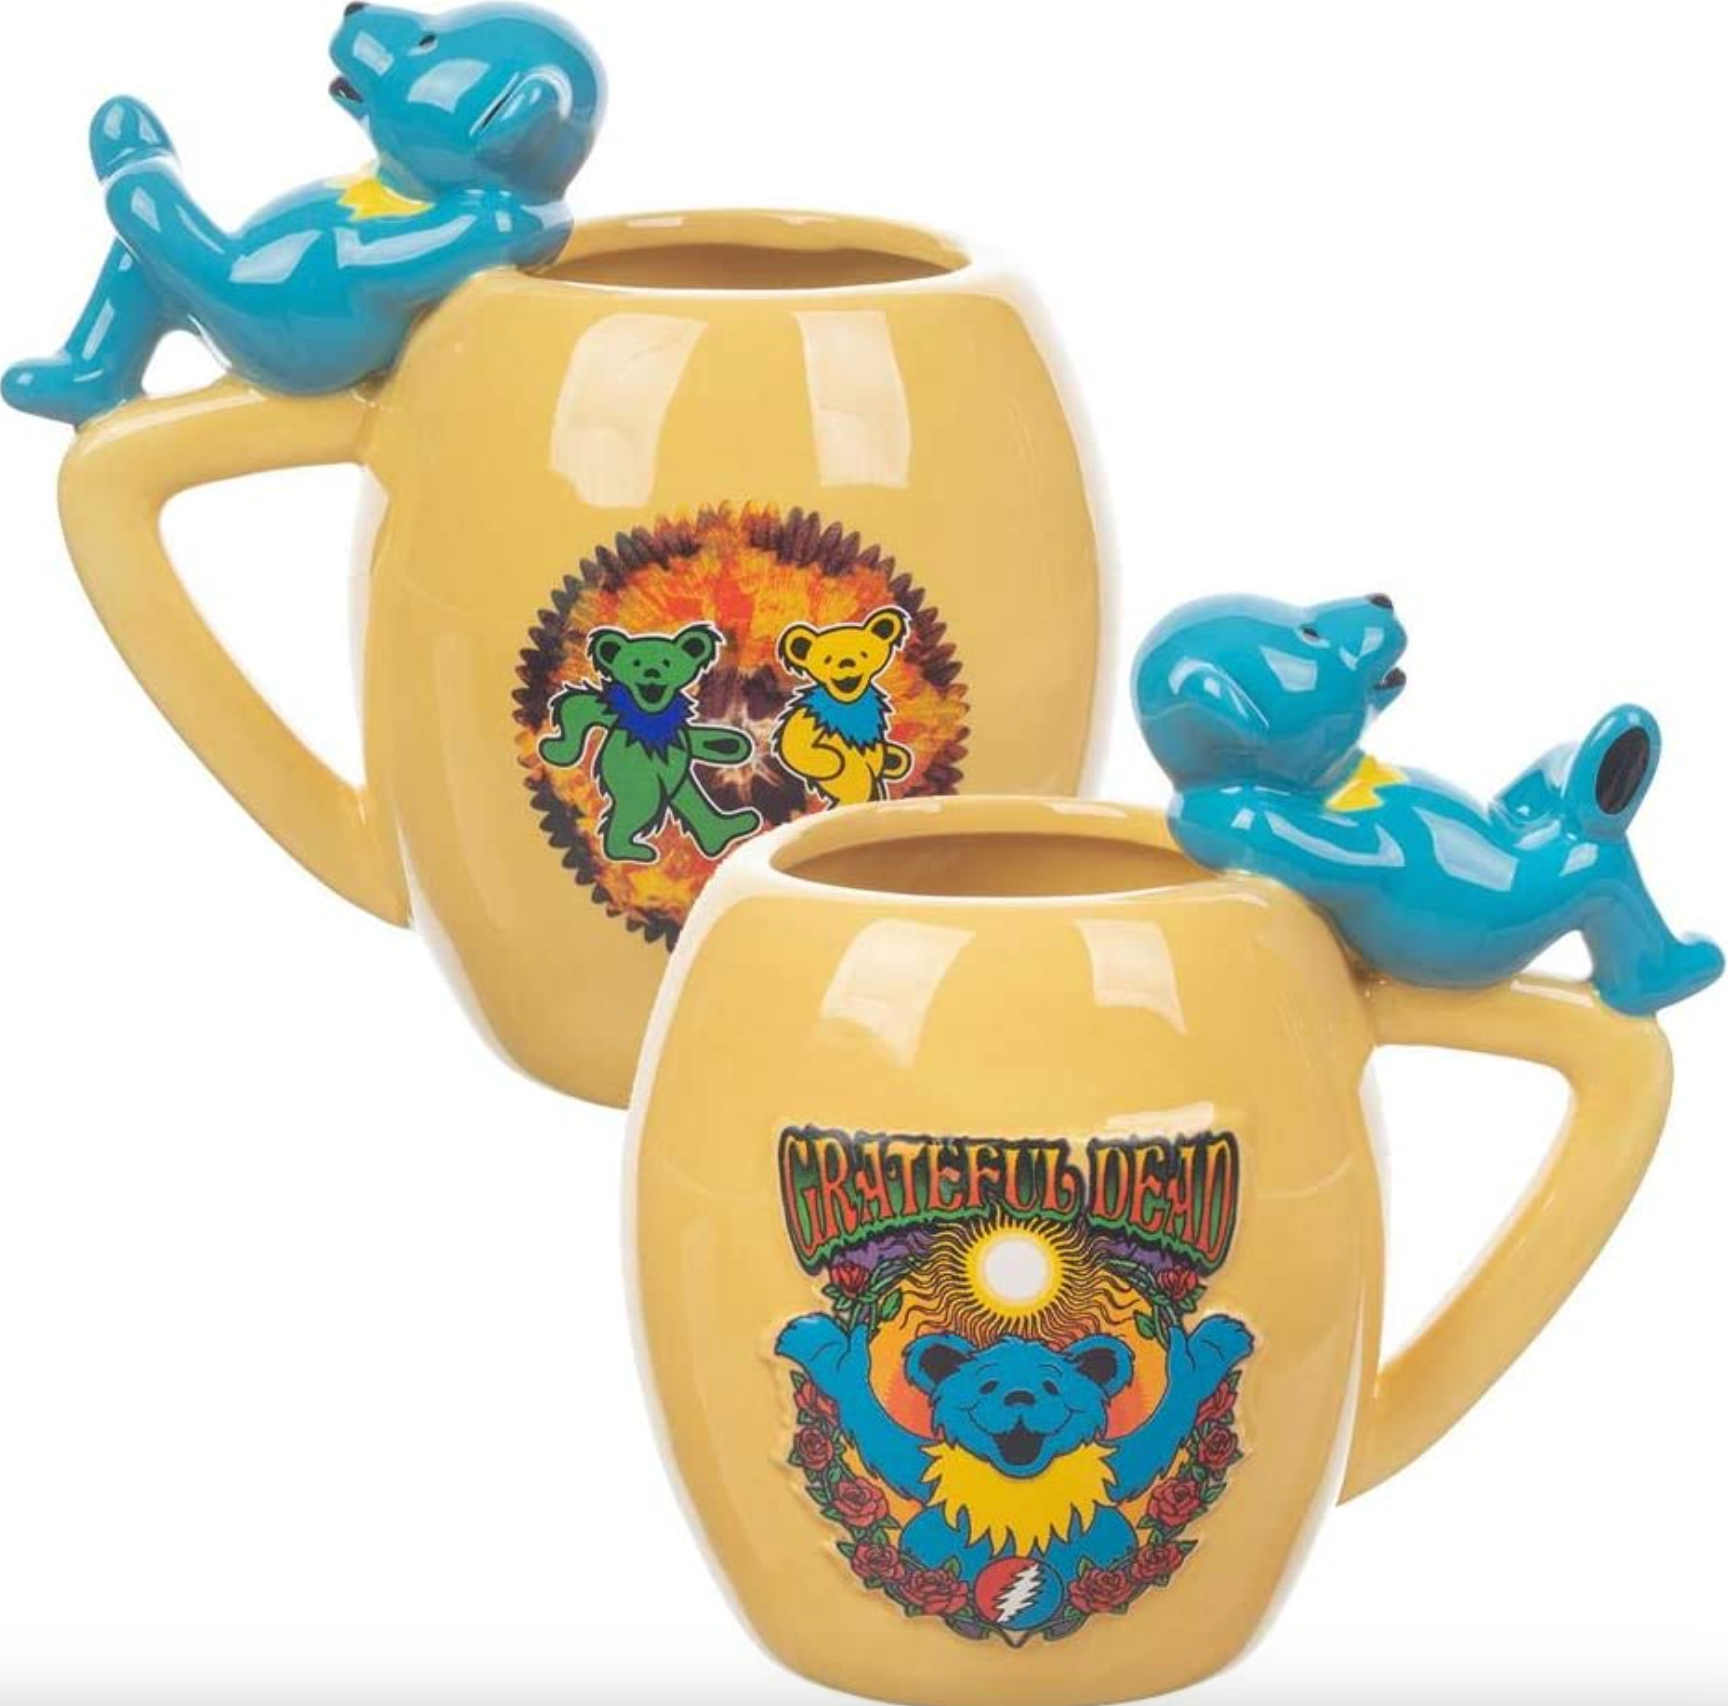 Grateful Dead Oval Ceramic Bear Mug